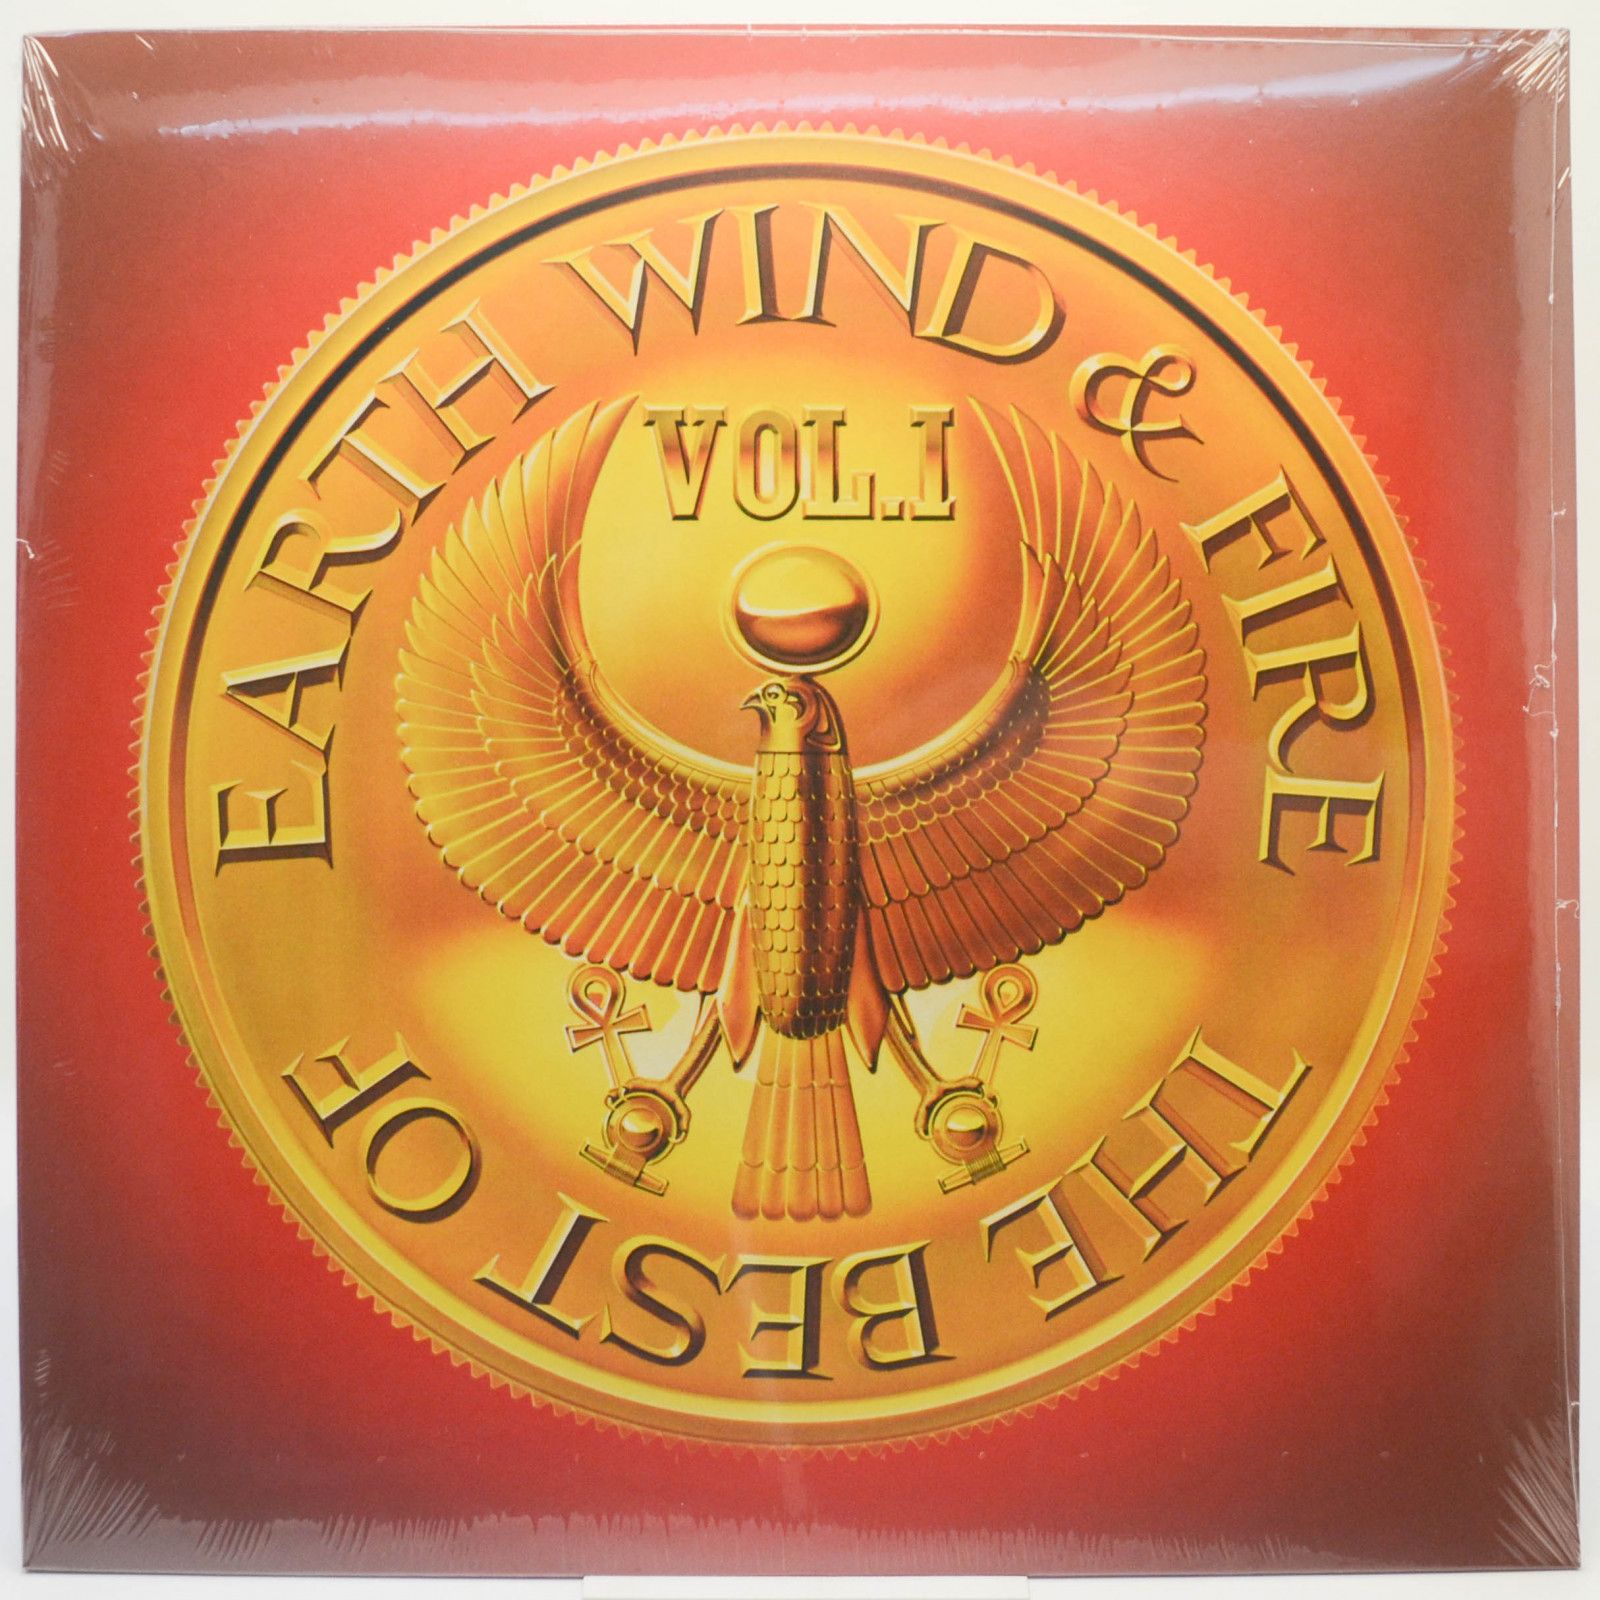 Earth, Wind & Fire - The Best Of Earth, Wind & Fire Vol. 1, 3980 ...